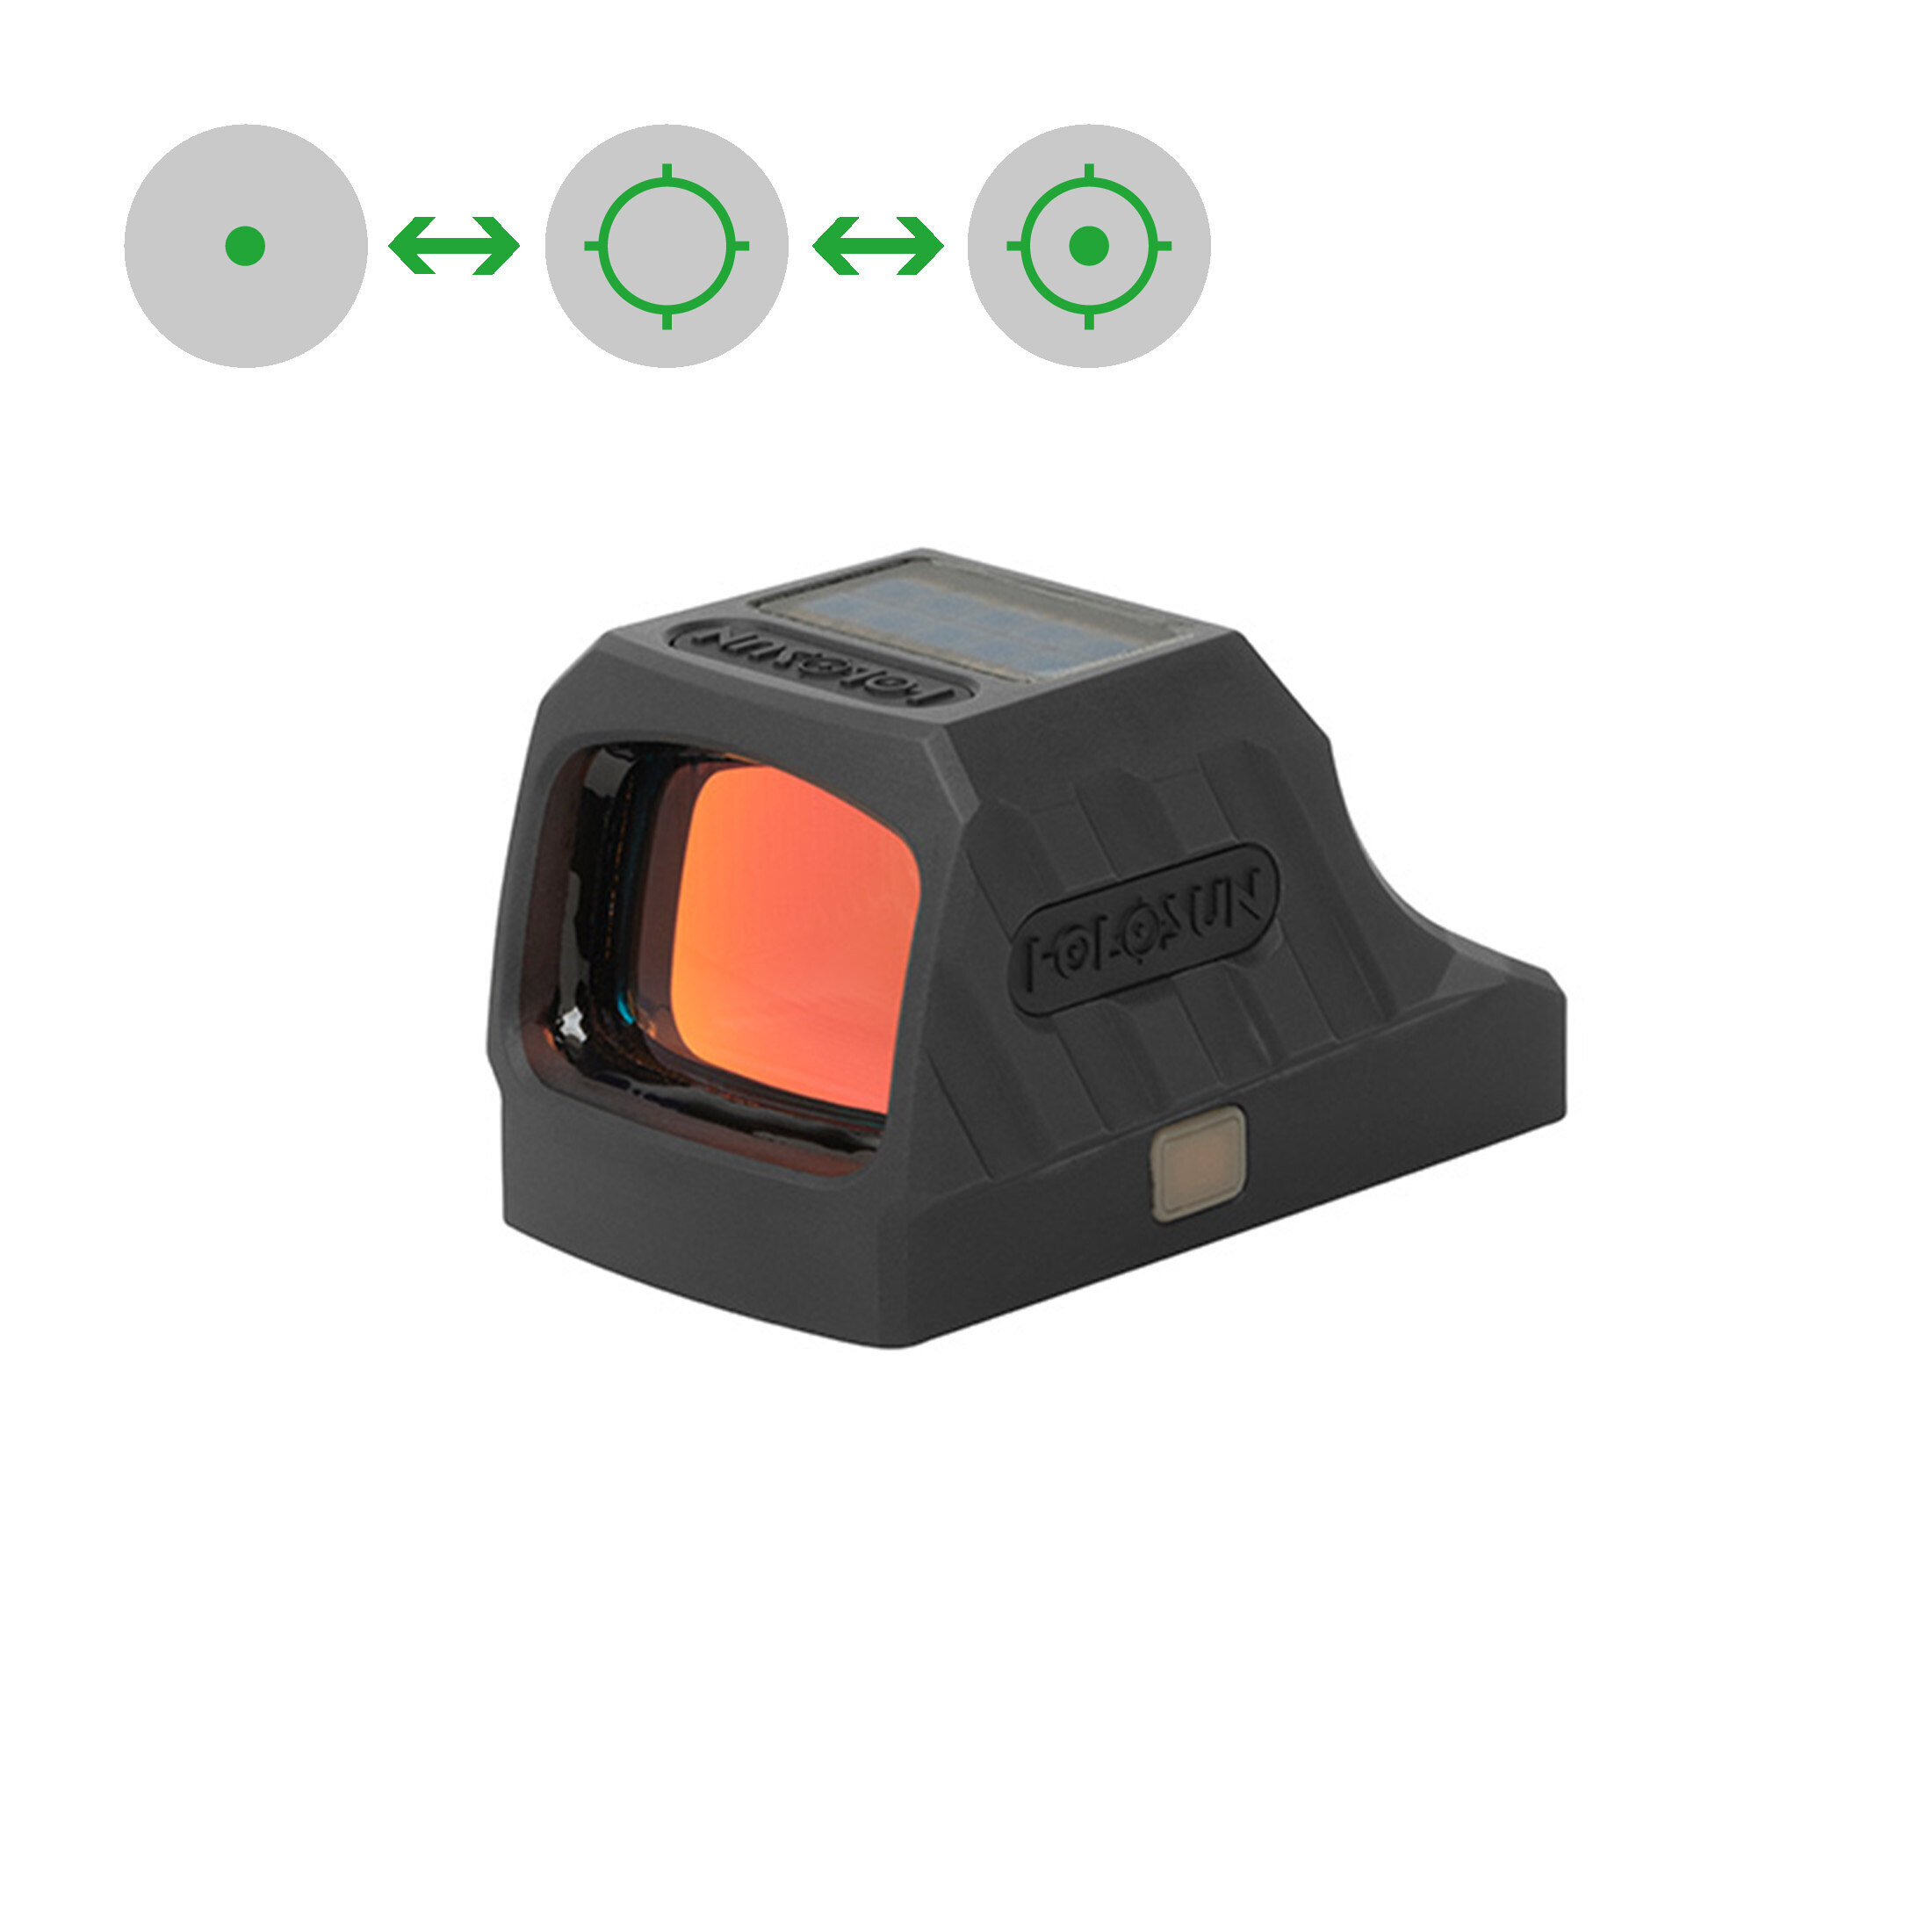 Holosun SCS-320-GR open reflex green dot sight switchable 2MOA dot, 32MOA circle dot reticle solar …